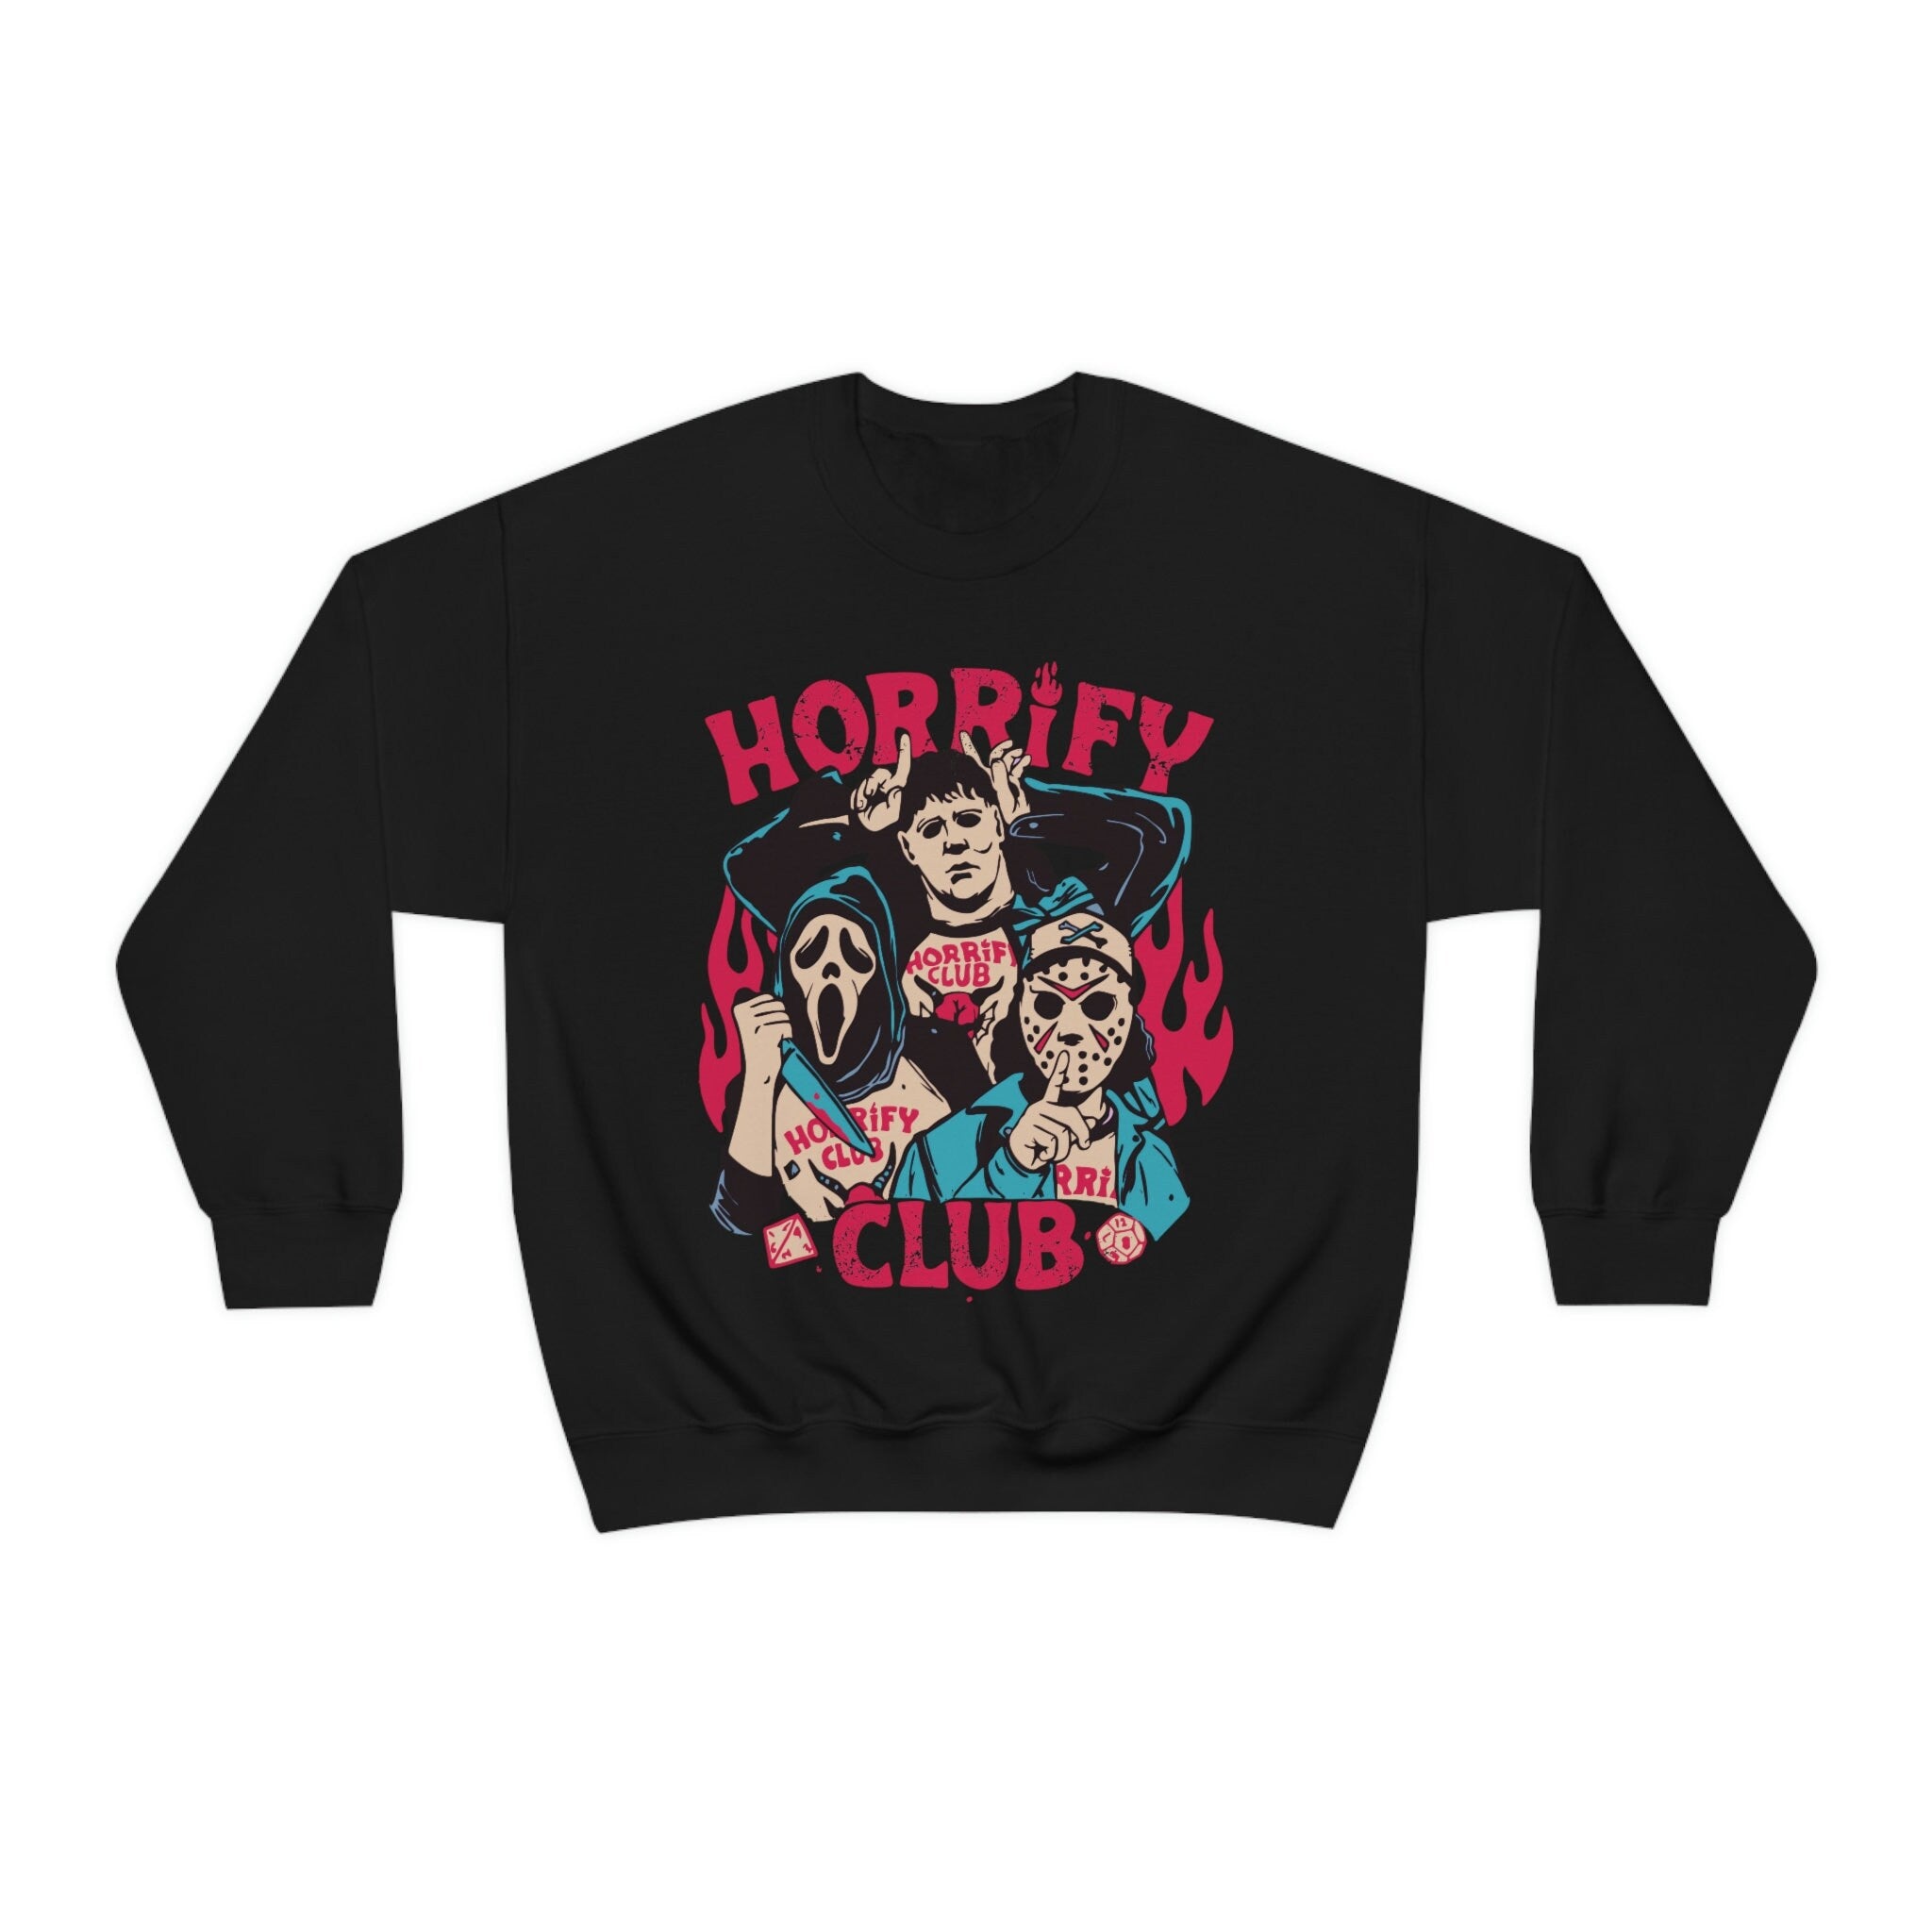 Horrifying Club Sweatshirt, Ghostface Sweatshirt, Horror Hoodie, Horror  merch, Michael Meyers, Jason, Eddie Munson, Horror aesthetic